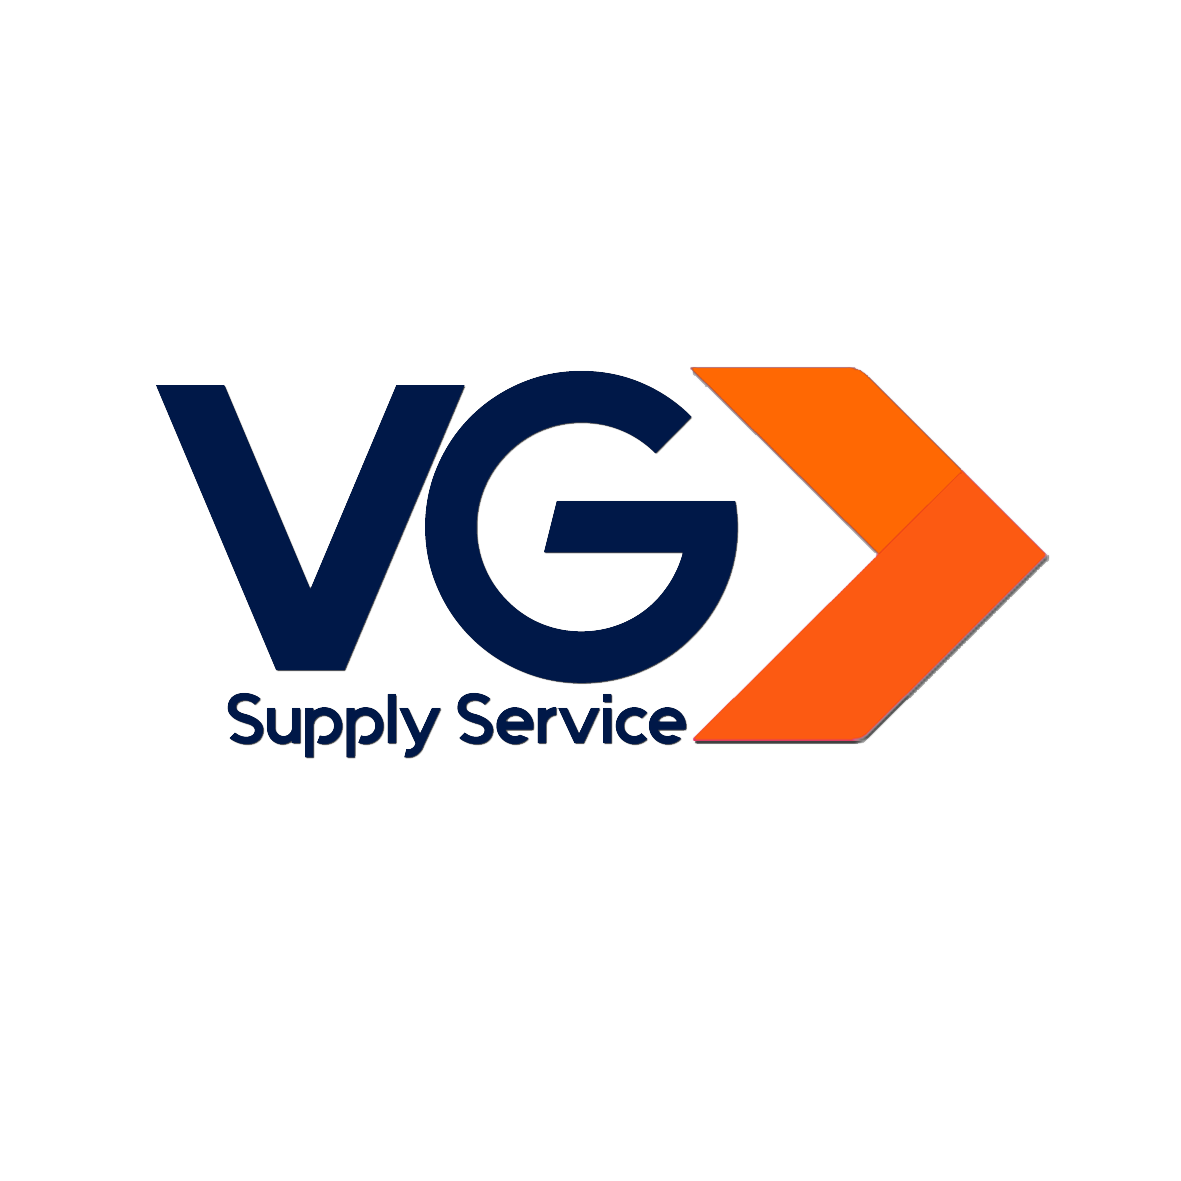 VG Supply Service